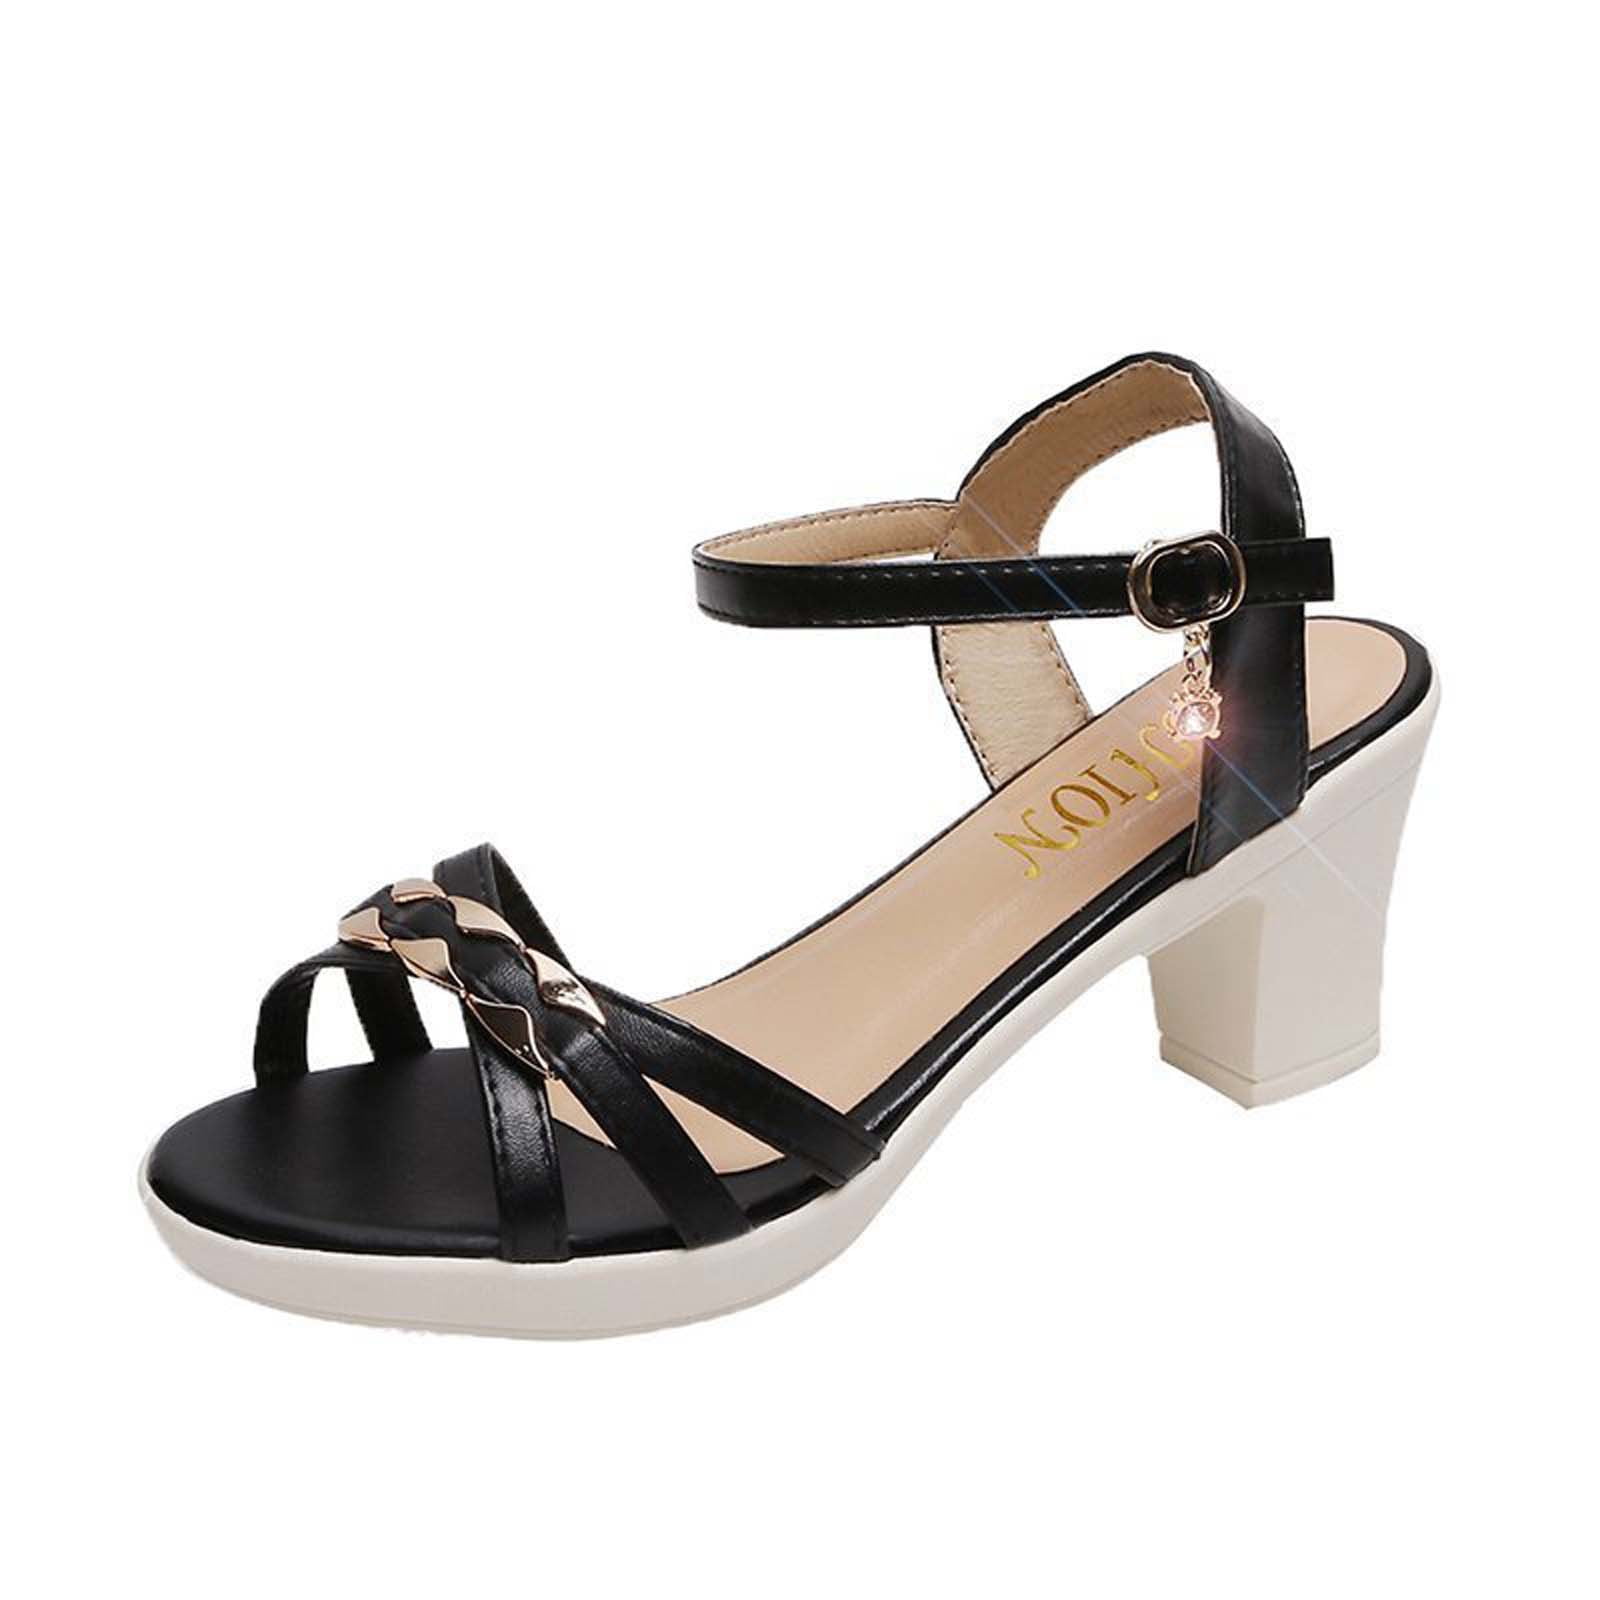 Buy Women Yellow Party Sandals Online | SKU: 35-4030-28-38-Metro Shoes